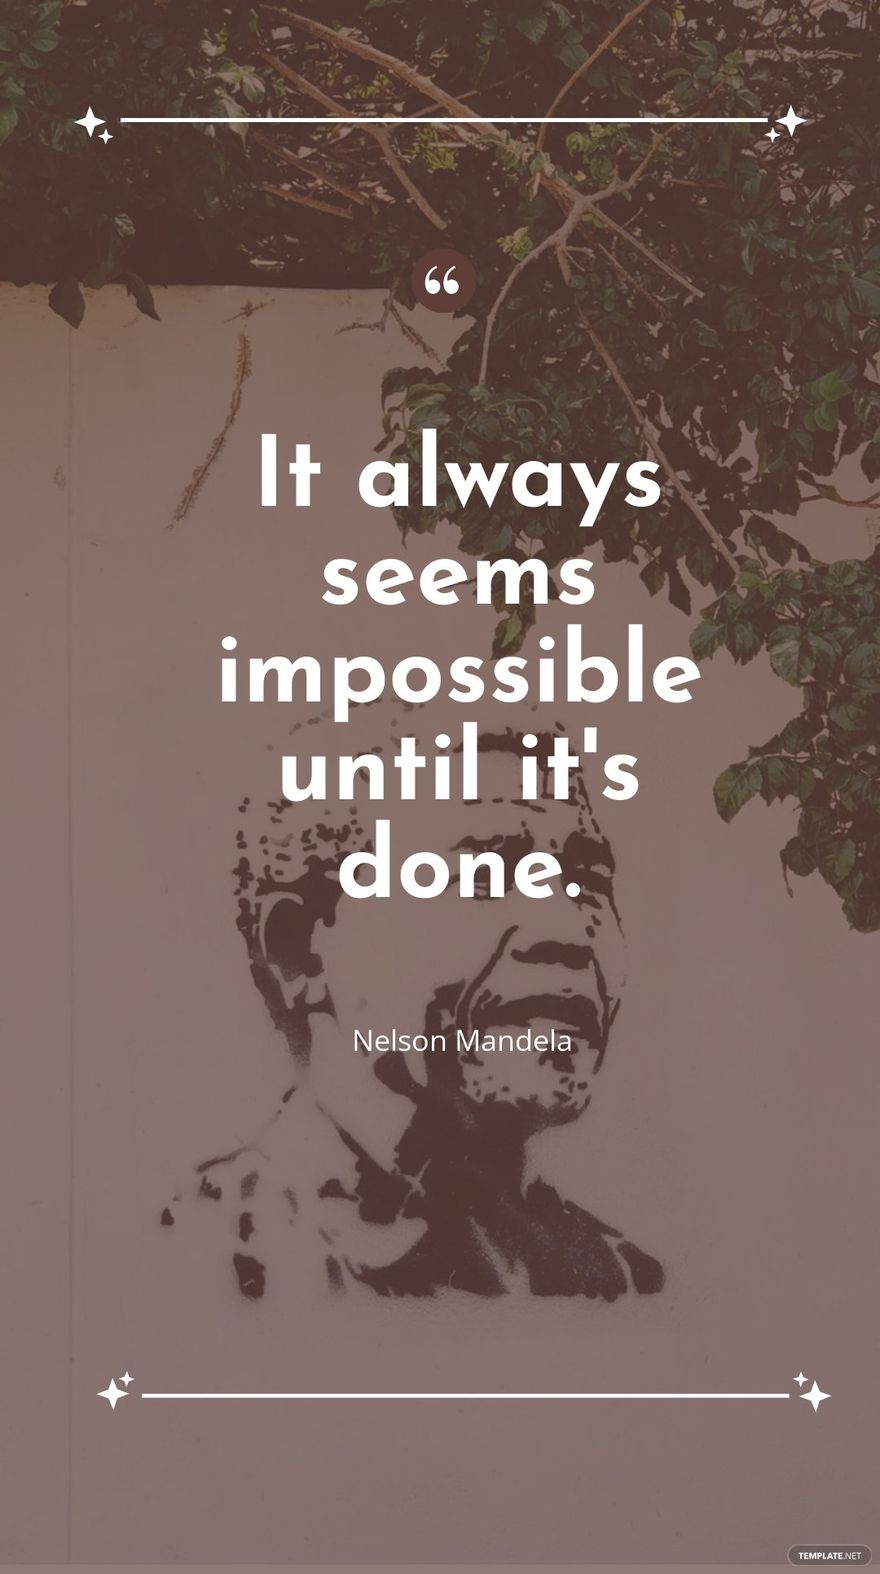 Nelson Mandela - It always seems impossible until it's done